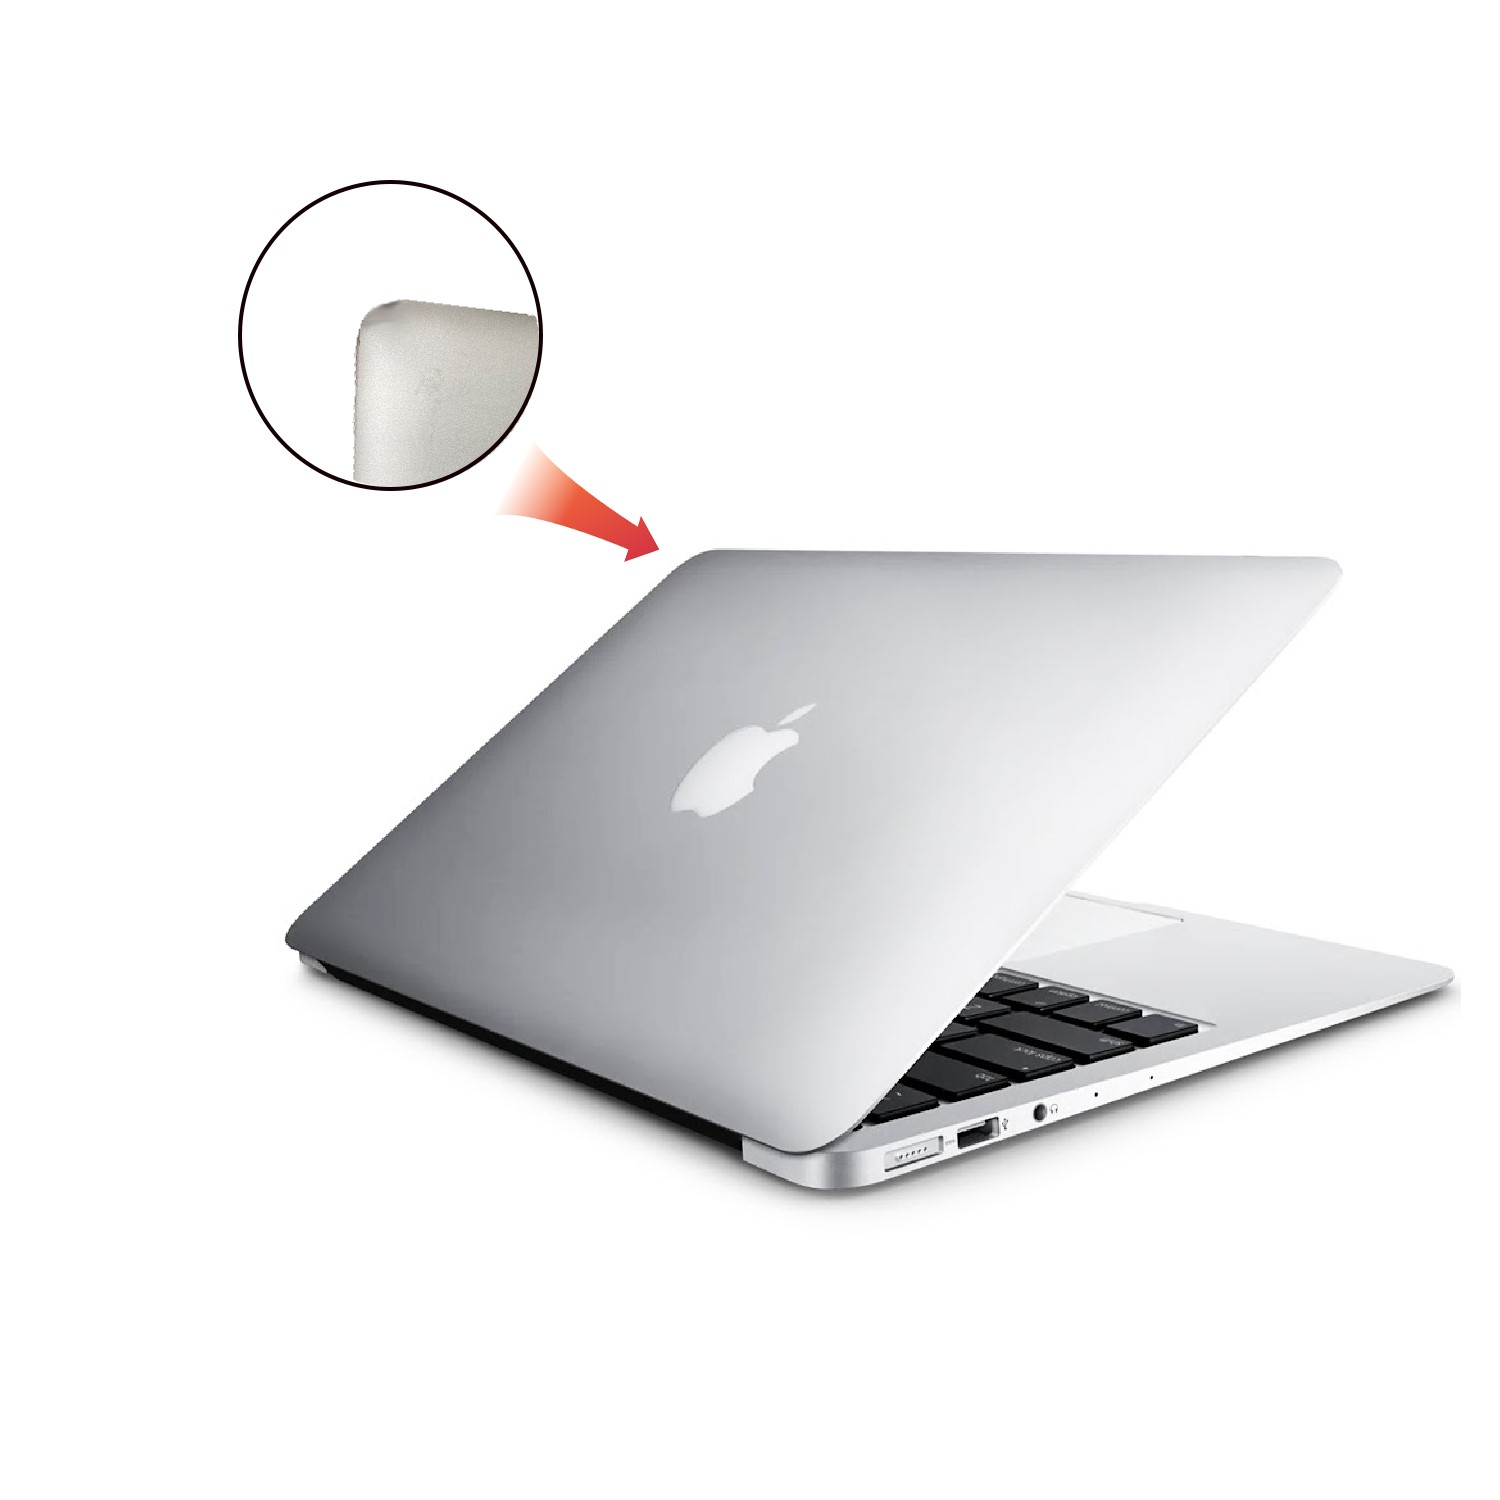 Refurbished (Fair) - Apple MacBook Air A1466 Laptop| 13.3 inch